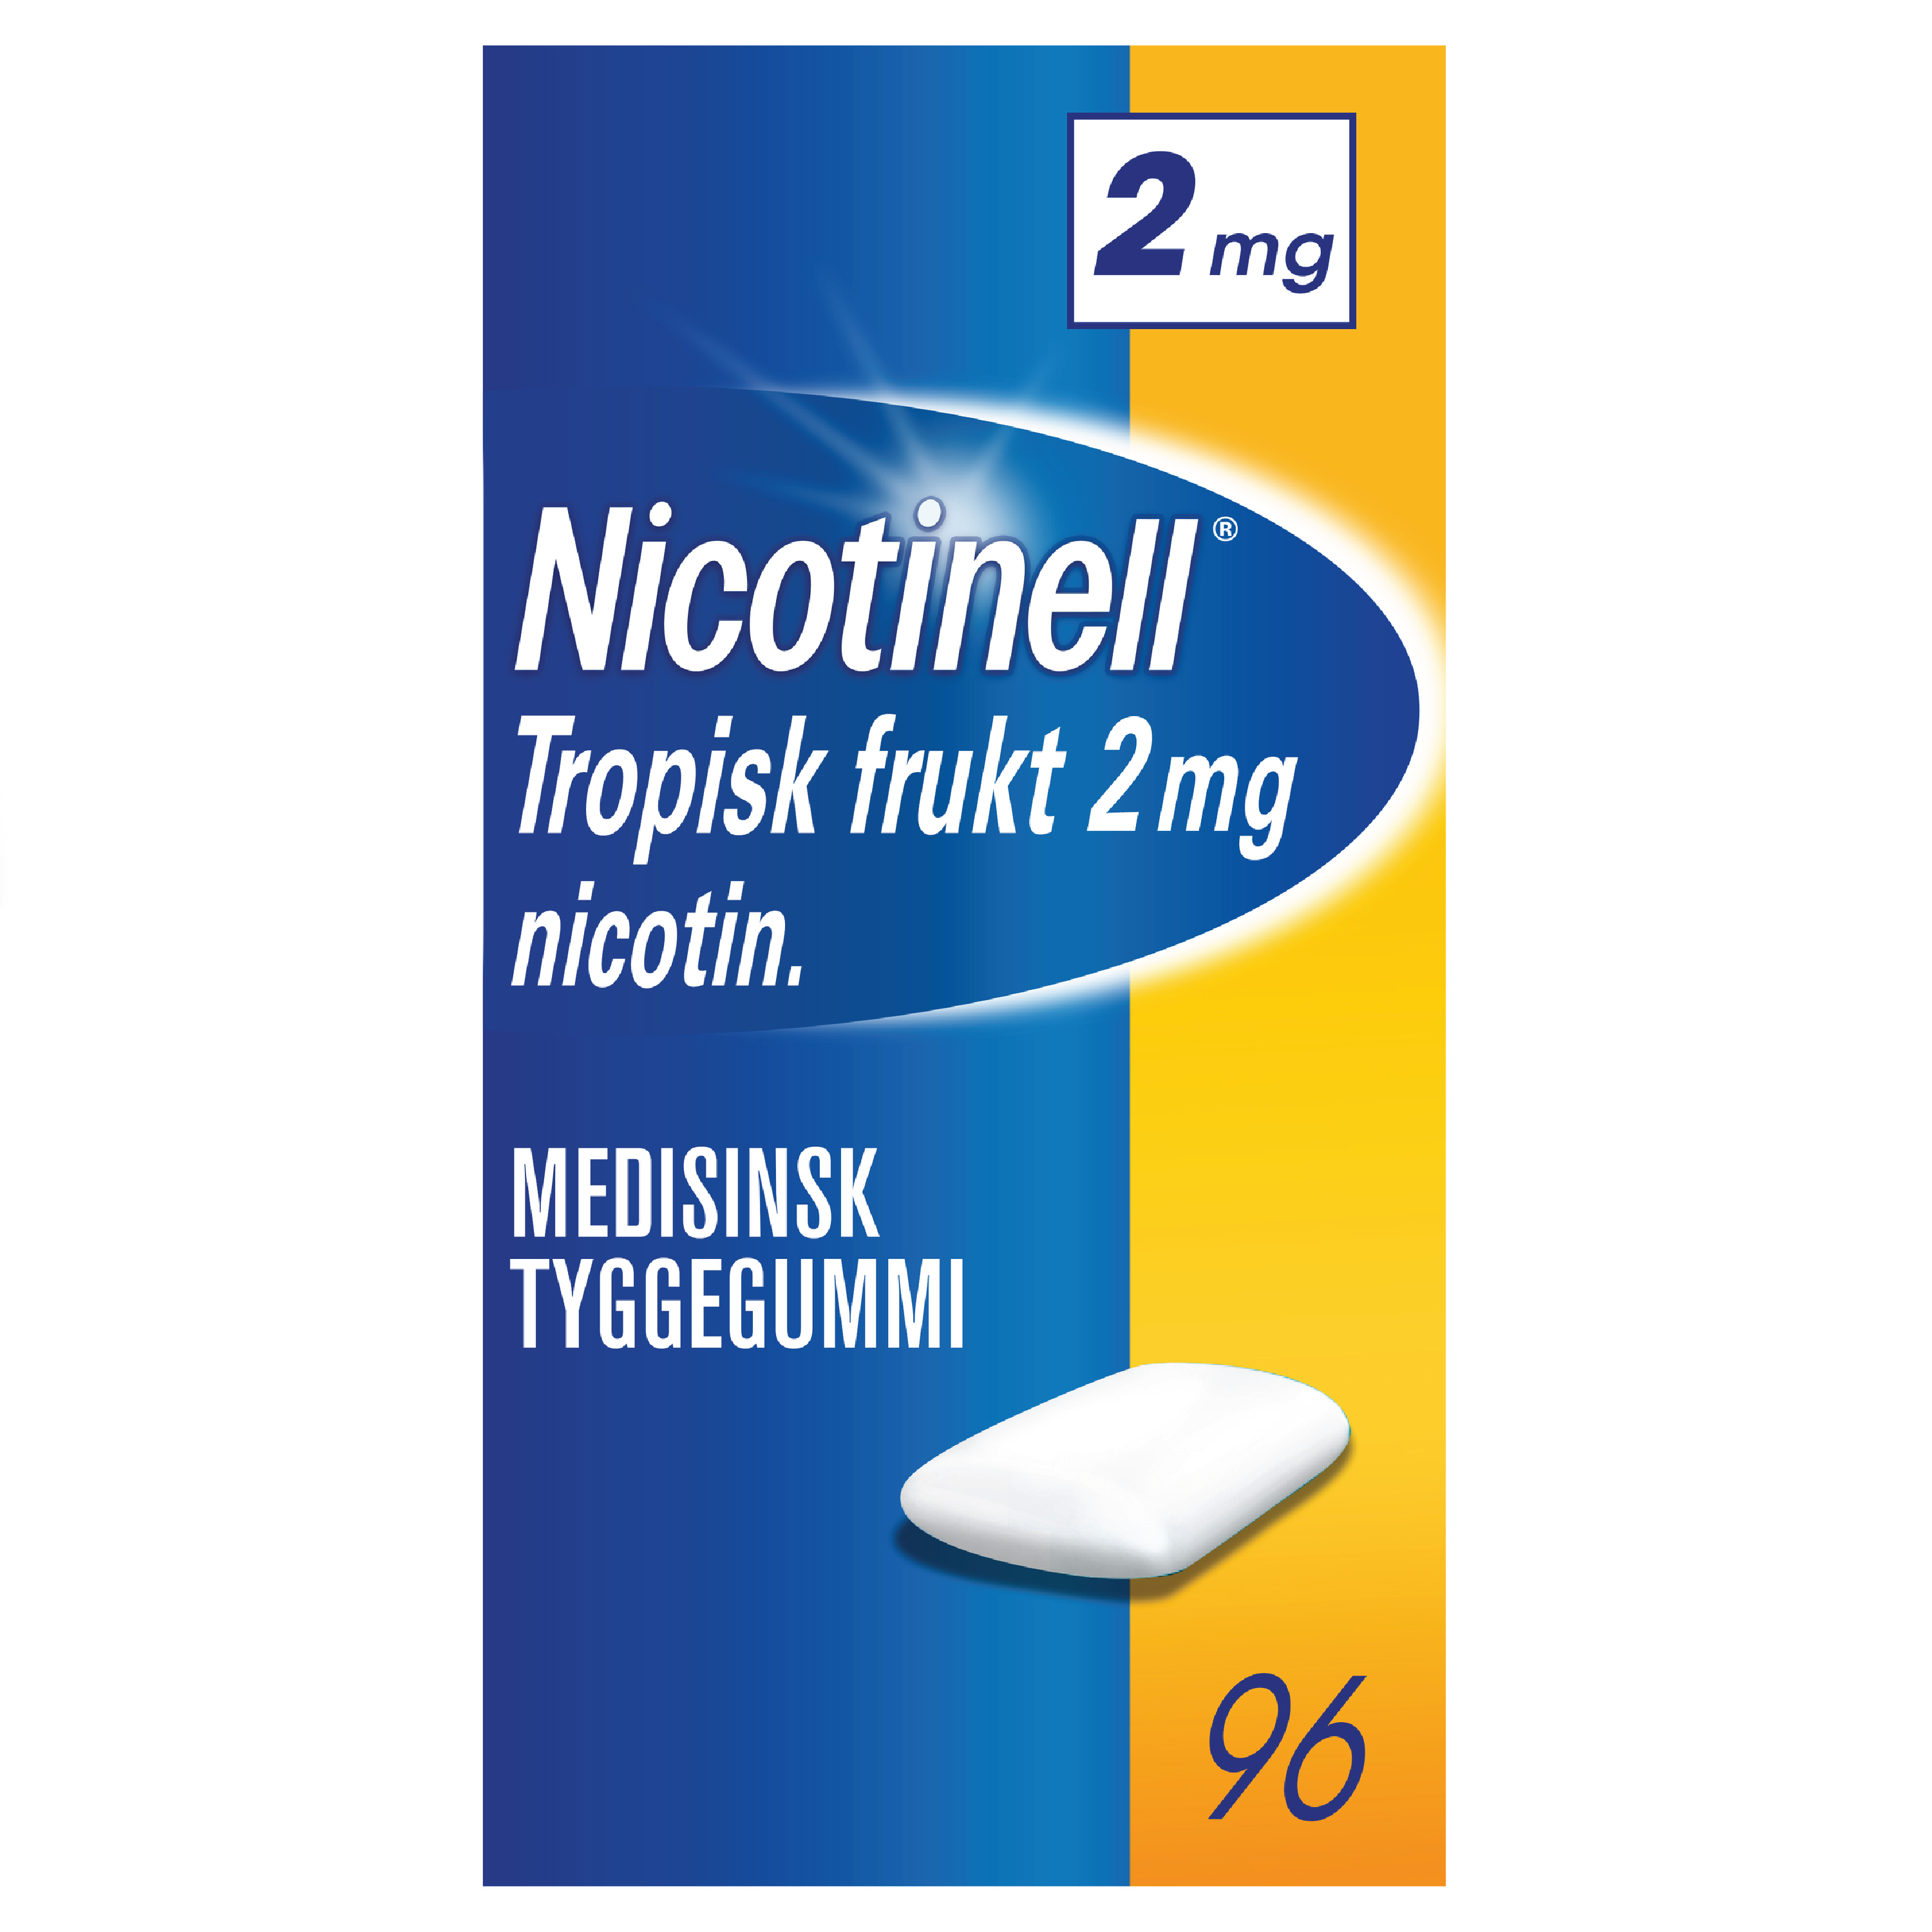 Nicotinell Tyggegummi 2 mg tropisk frukt, 96 stk.